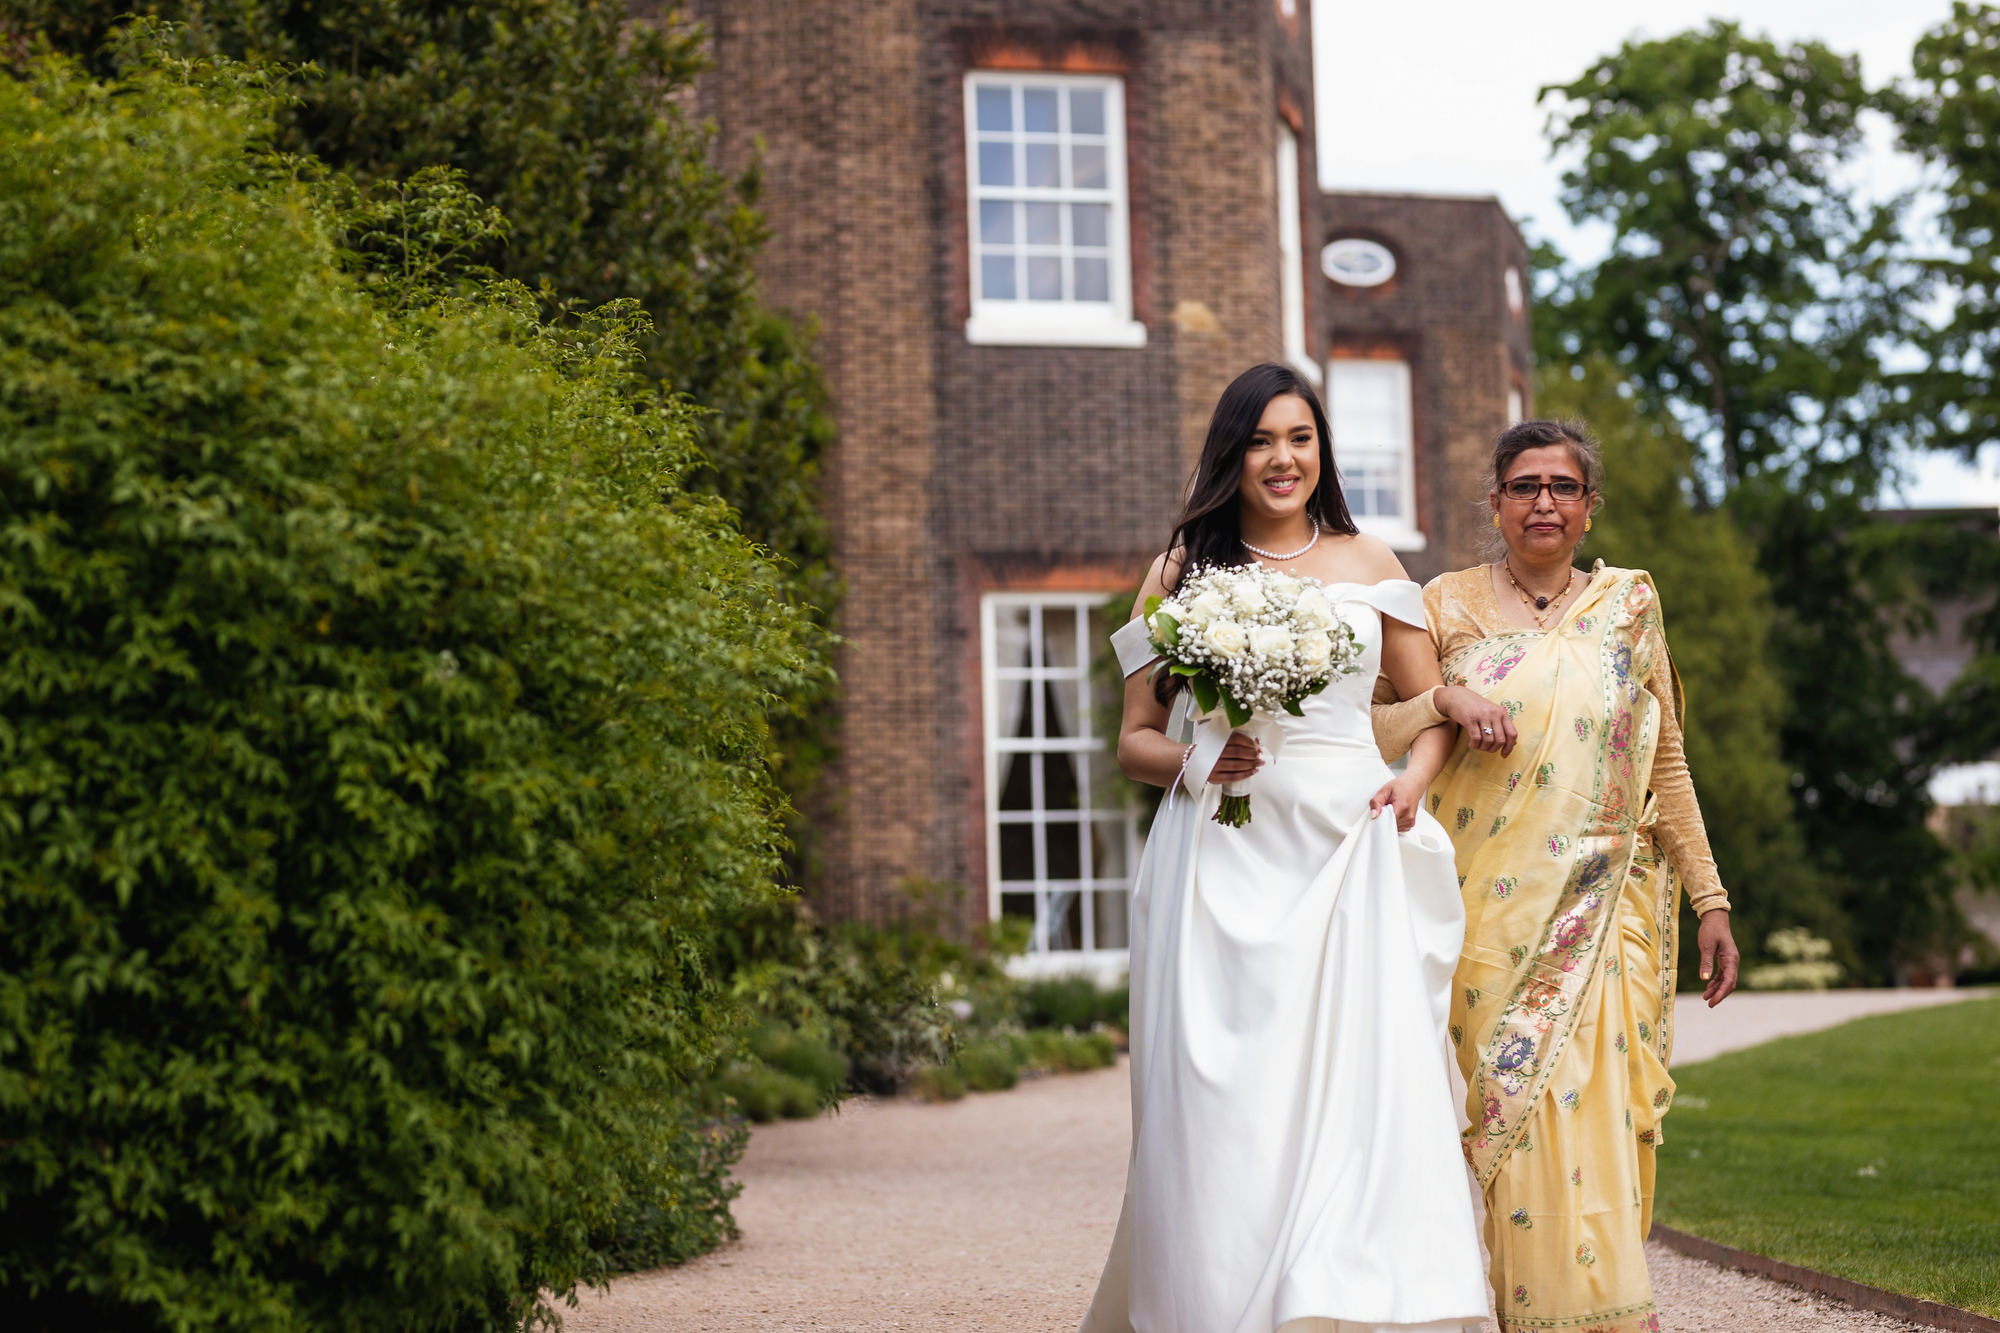 Langtons House, Essex, Natural wedding photography, Civil ceremony, brides entrance